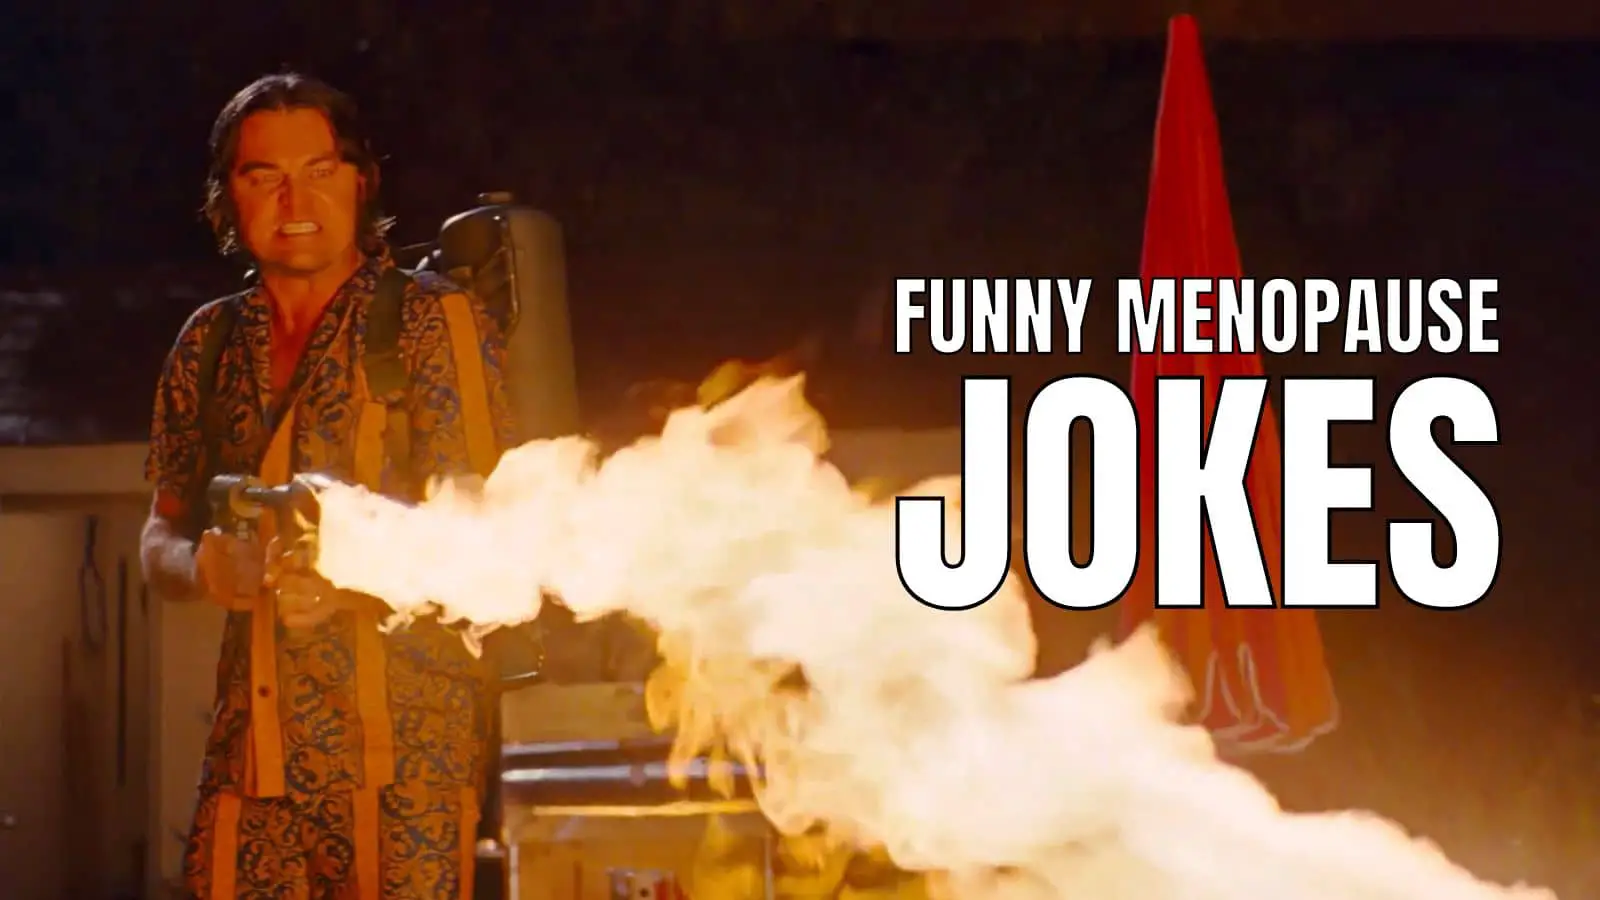 Funny Menopause Jokes on Hot Flashes